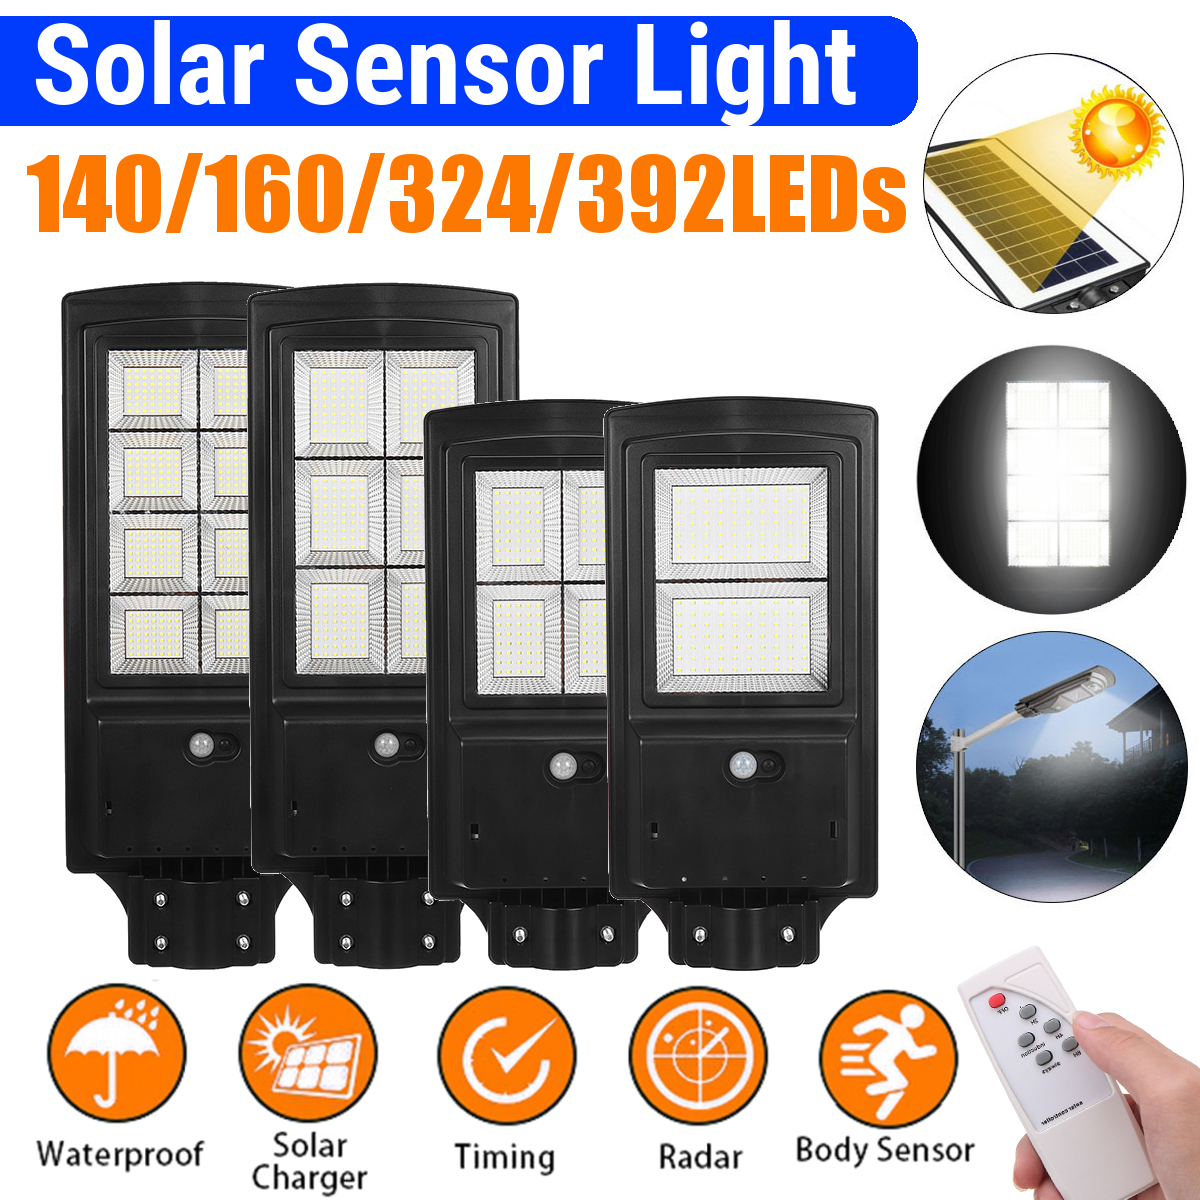 140160324392LED-Solar-Powered-LED-Street-Light-PIR-Motion-Sensor-Wall-Lamp--Remote-1719785-1